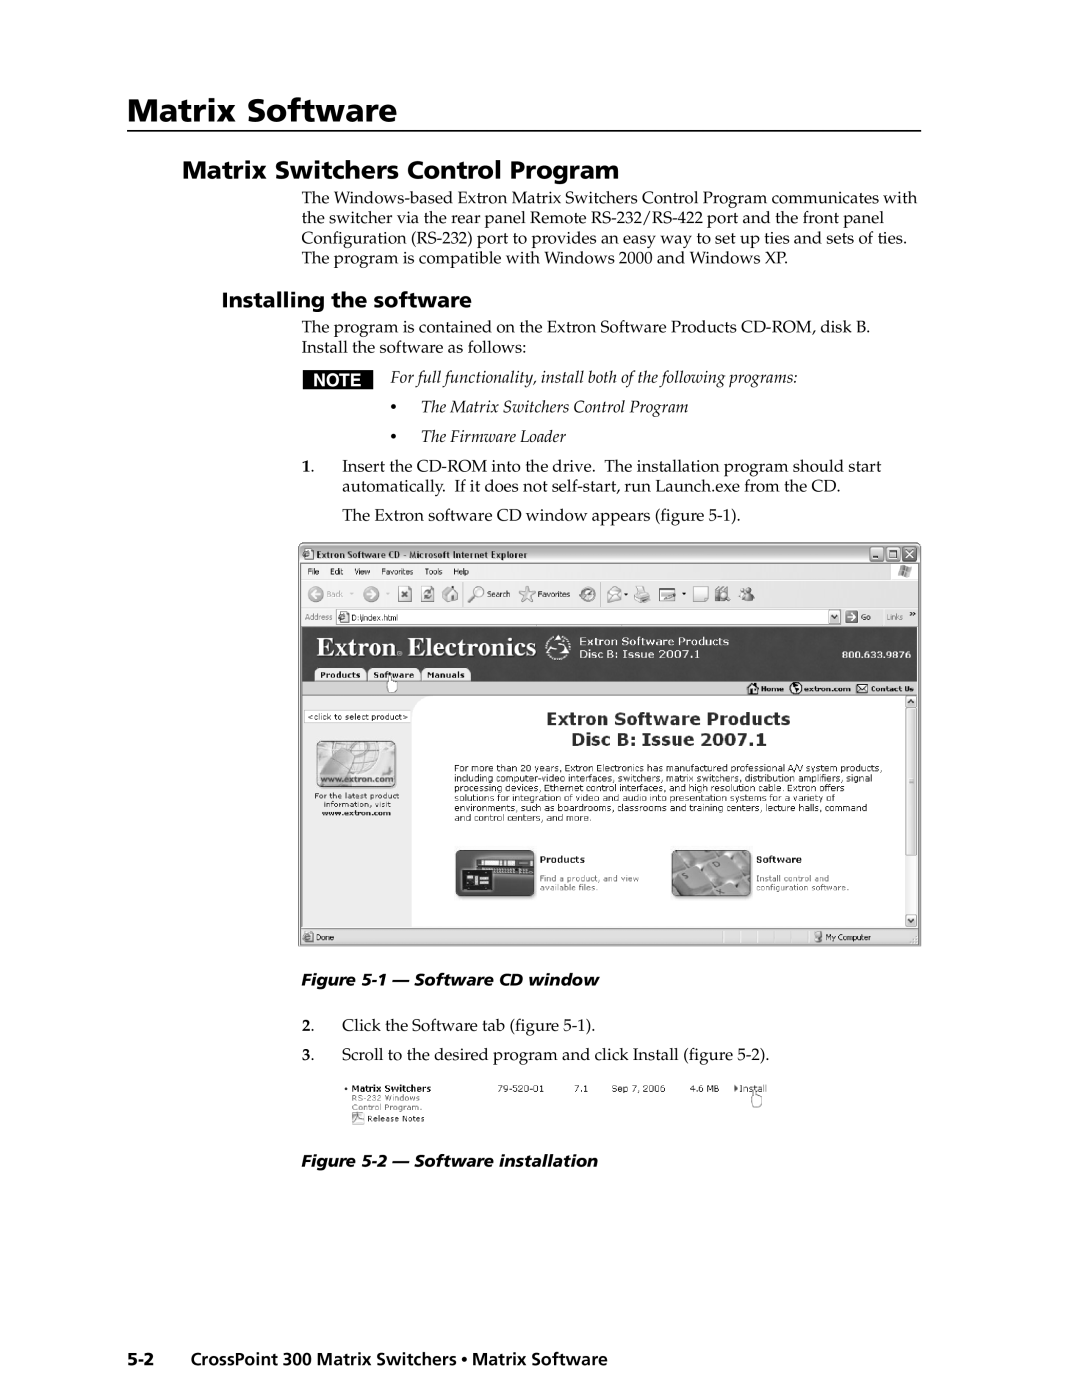 Extron electronic 168, 84, 1616, 1212, 124 MatrixSoftware,cont’d, Matrix Switchers Control Program, Installing the software 